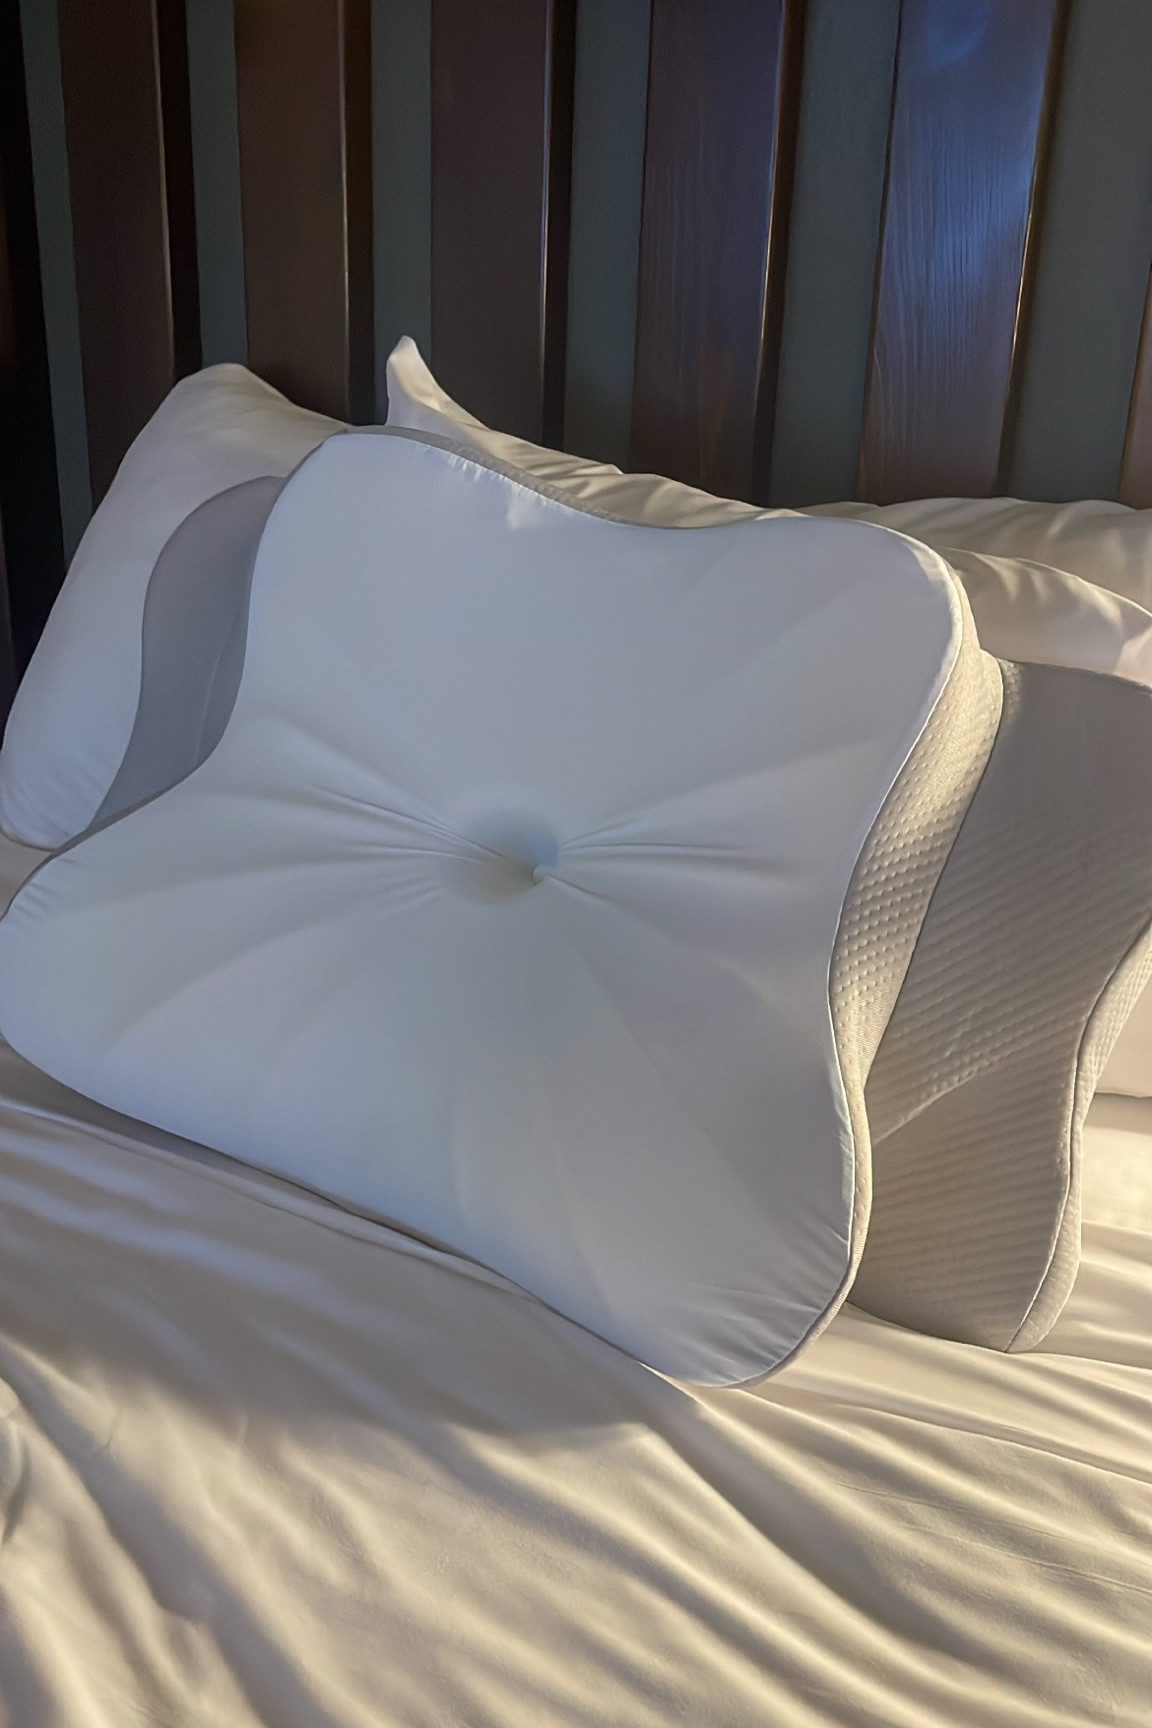 DONAMA Cervical Pillow for Neck Pain Relief,Memory Foam Pillow